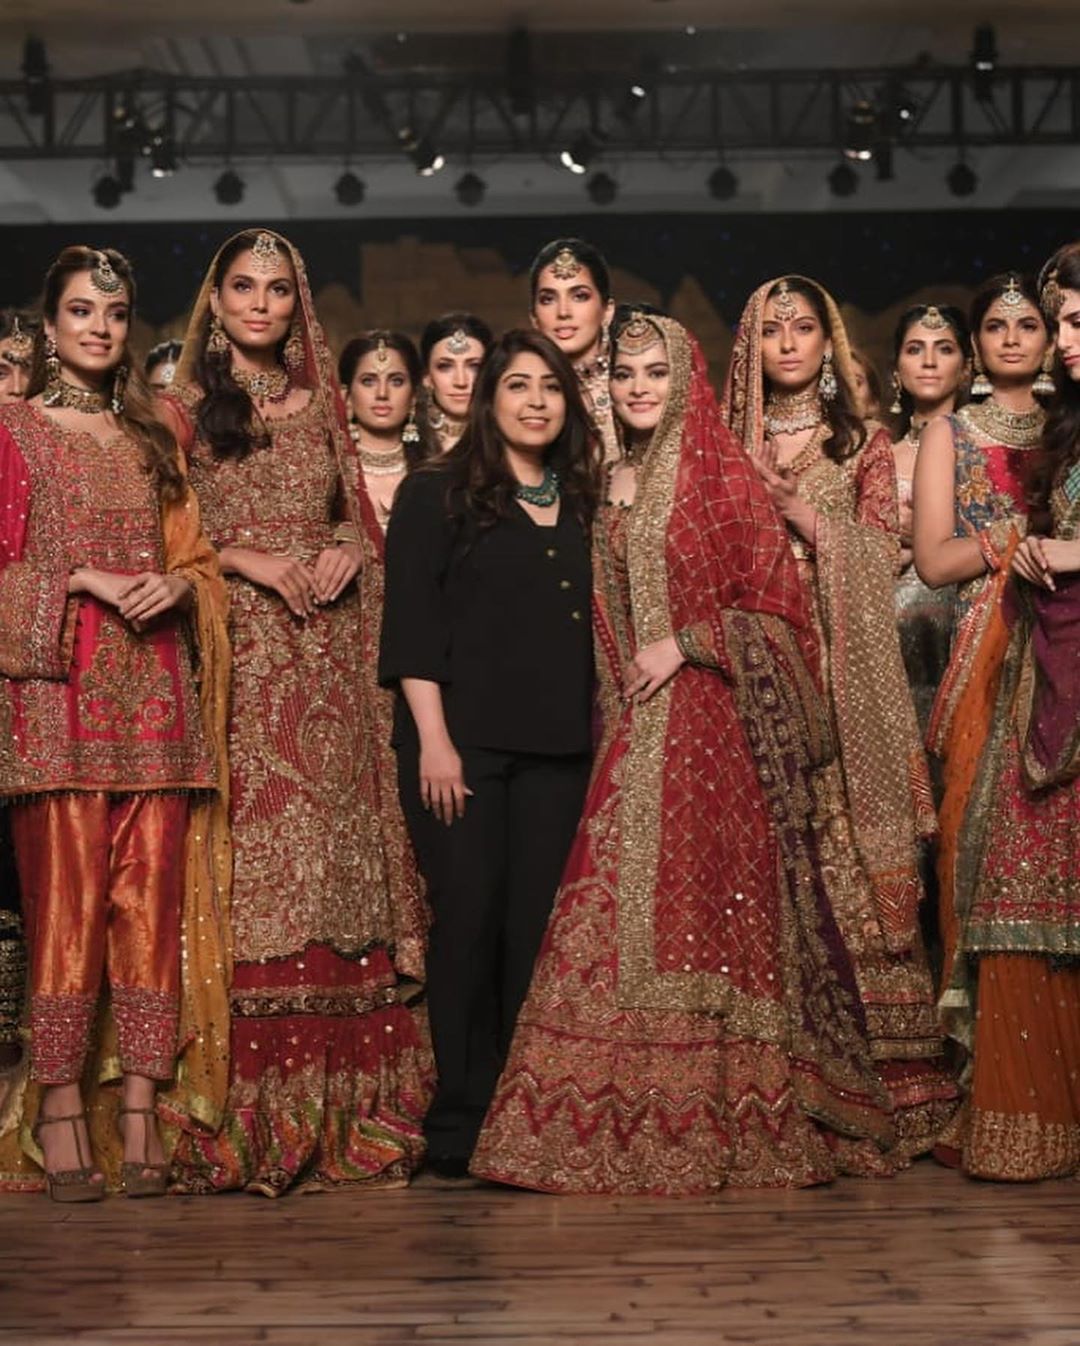 Gorgeous and Beautiful Minal Khan Walked for Aisha Imran at HBCW19